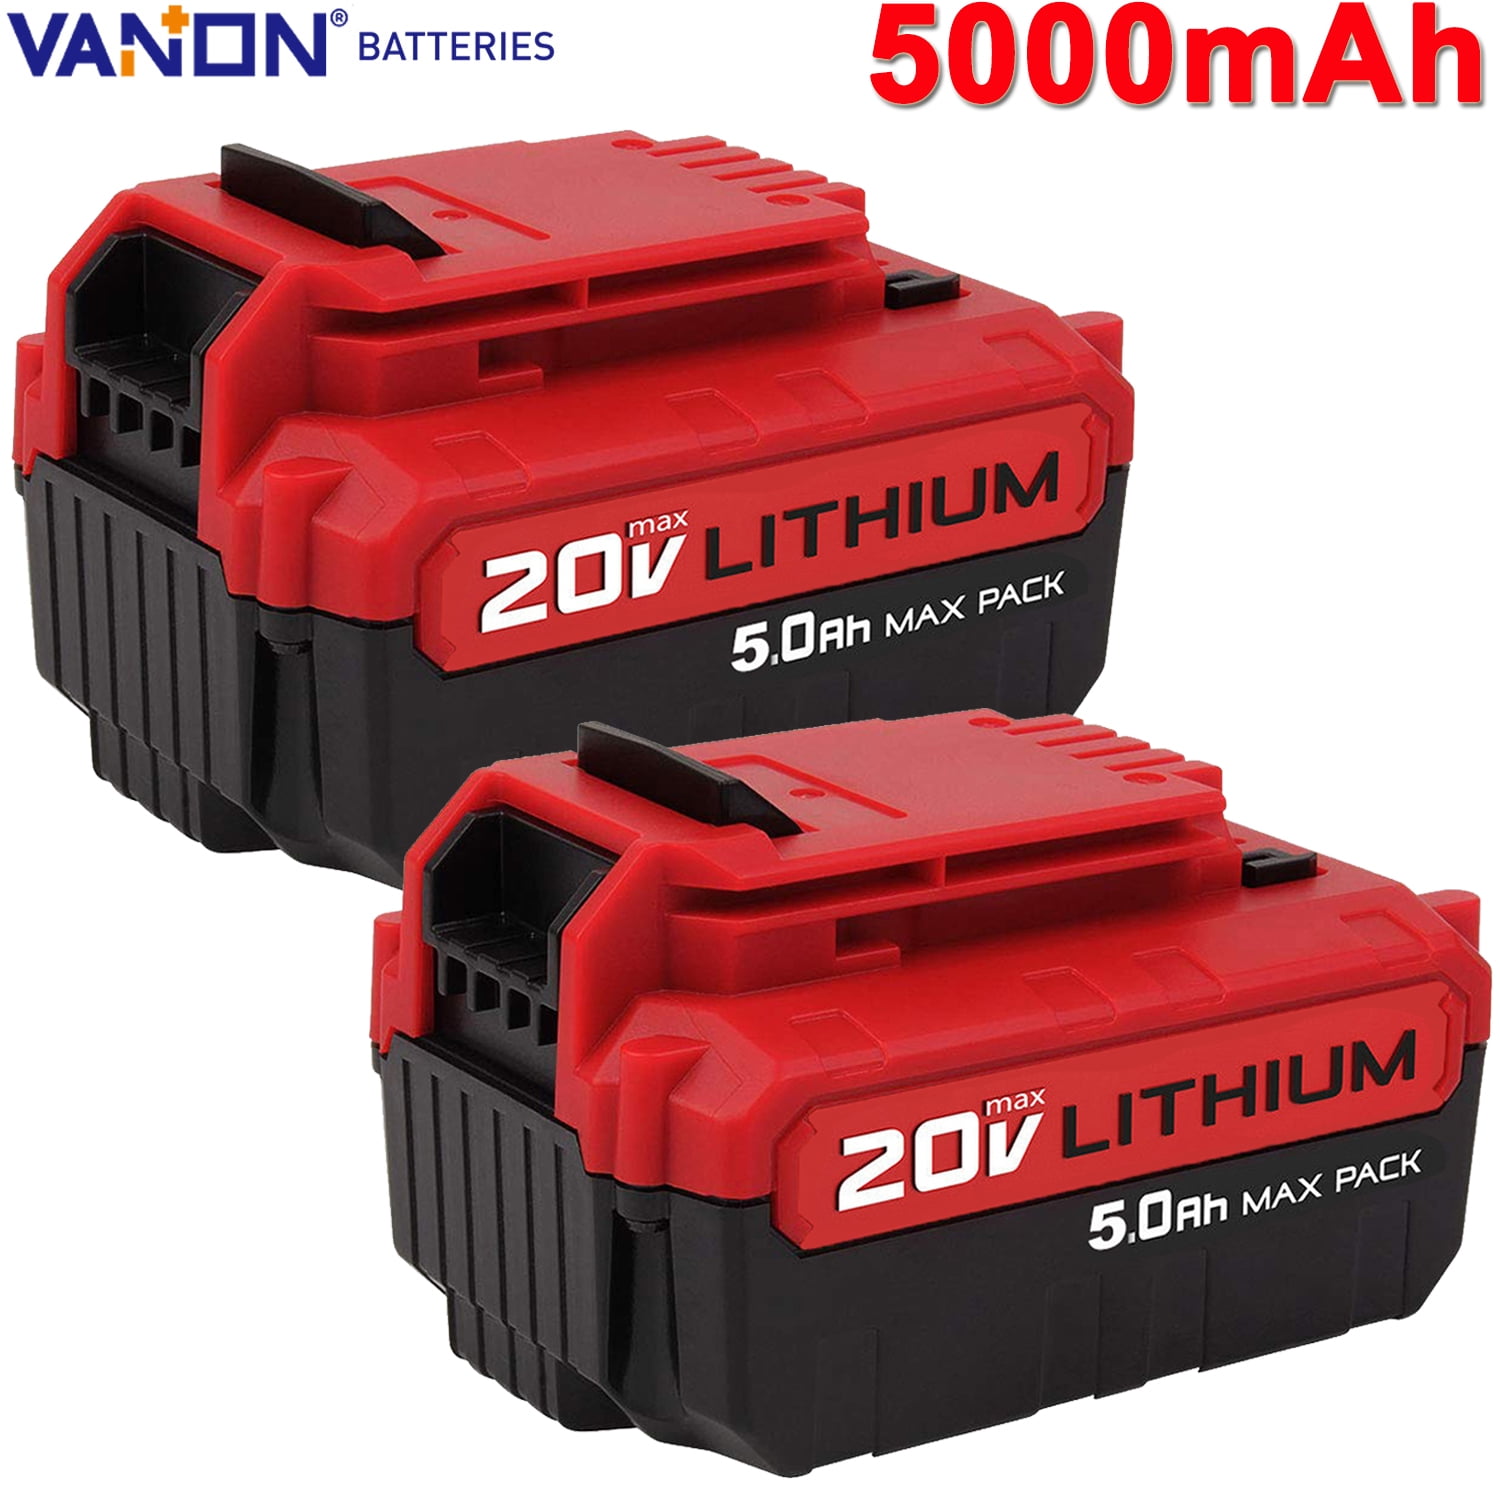 20V 2Ah Lithium Drill Battery for Porter Cable PCC680L PCC681L PCC682L PCC685L 